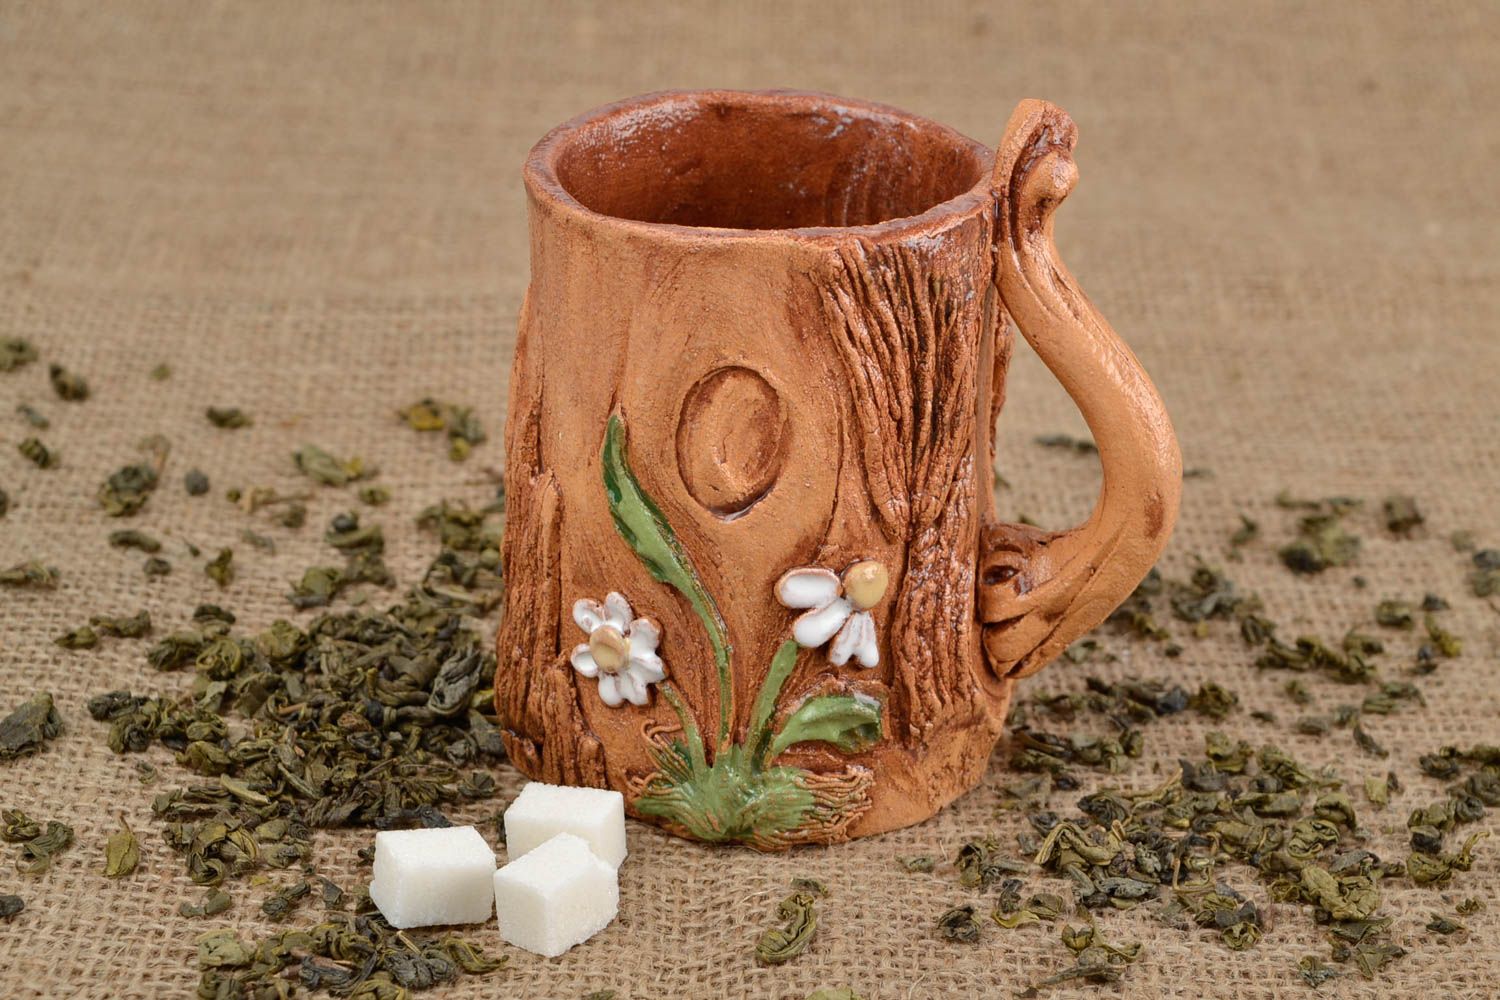 8 oz ceramic glazed forest style handmade cup 0,94 lb photo 1